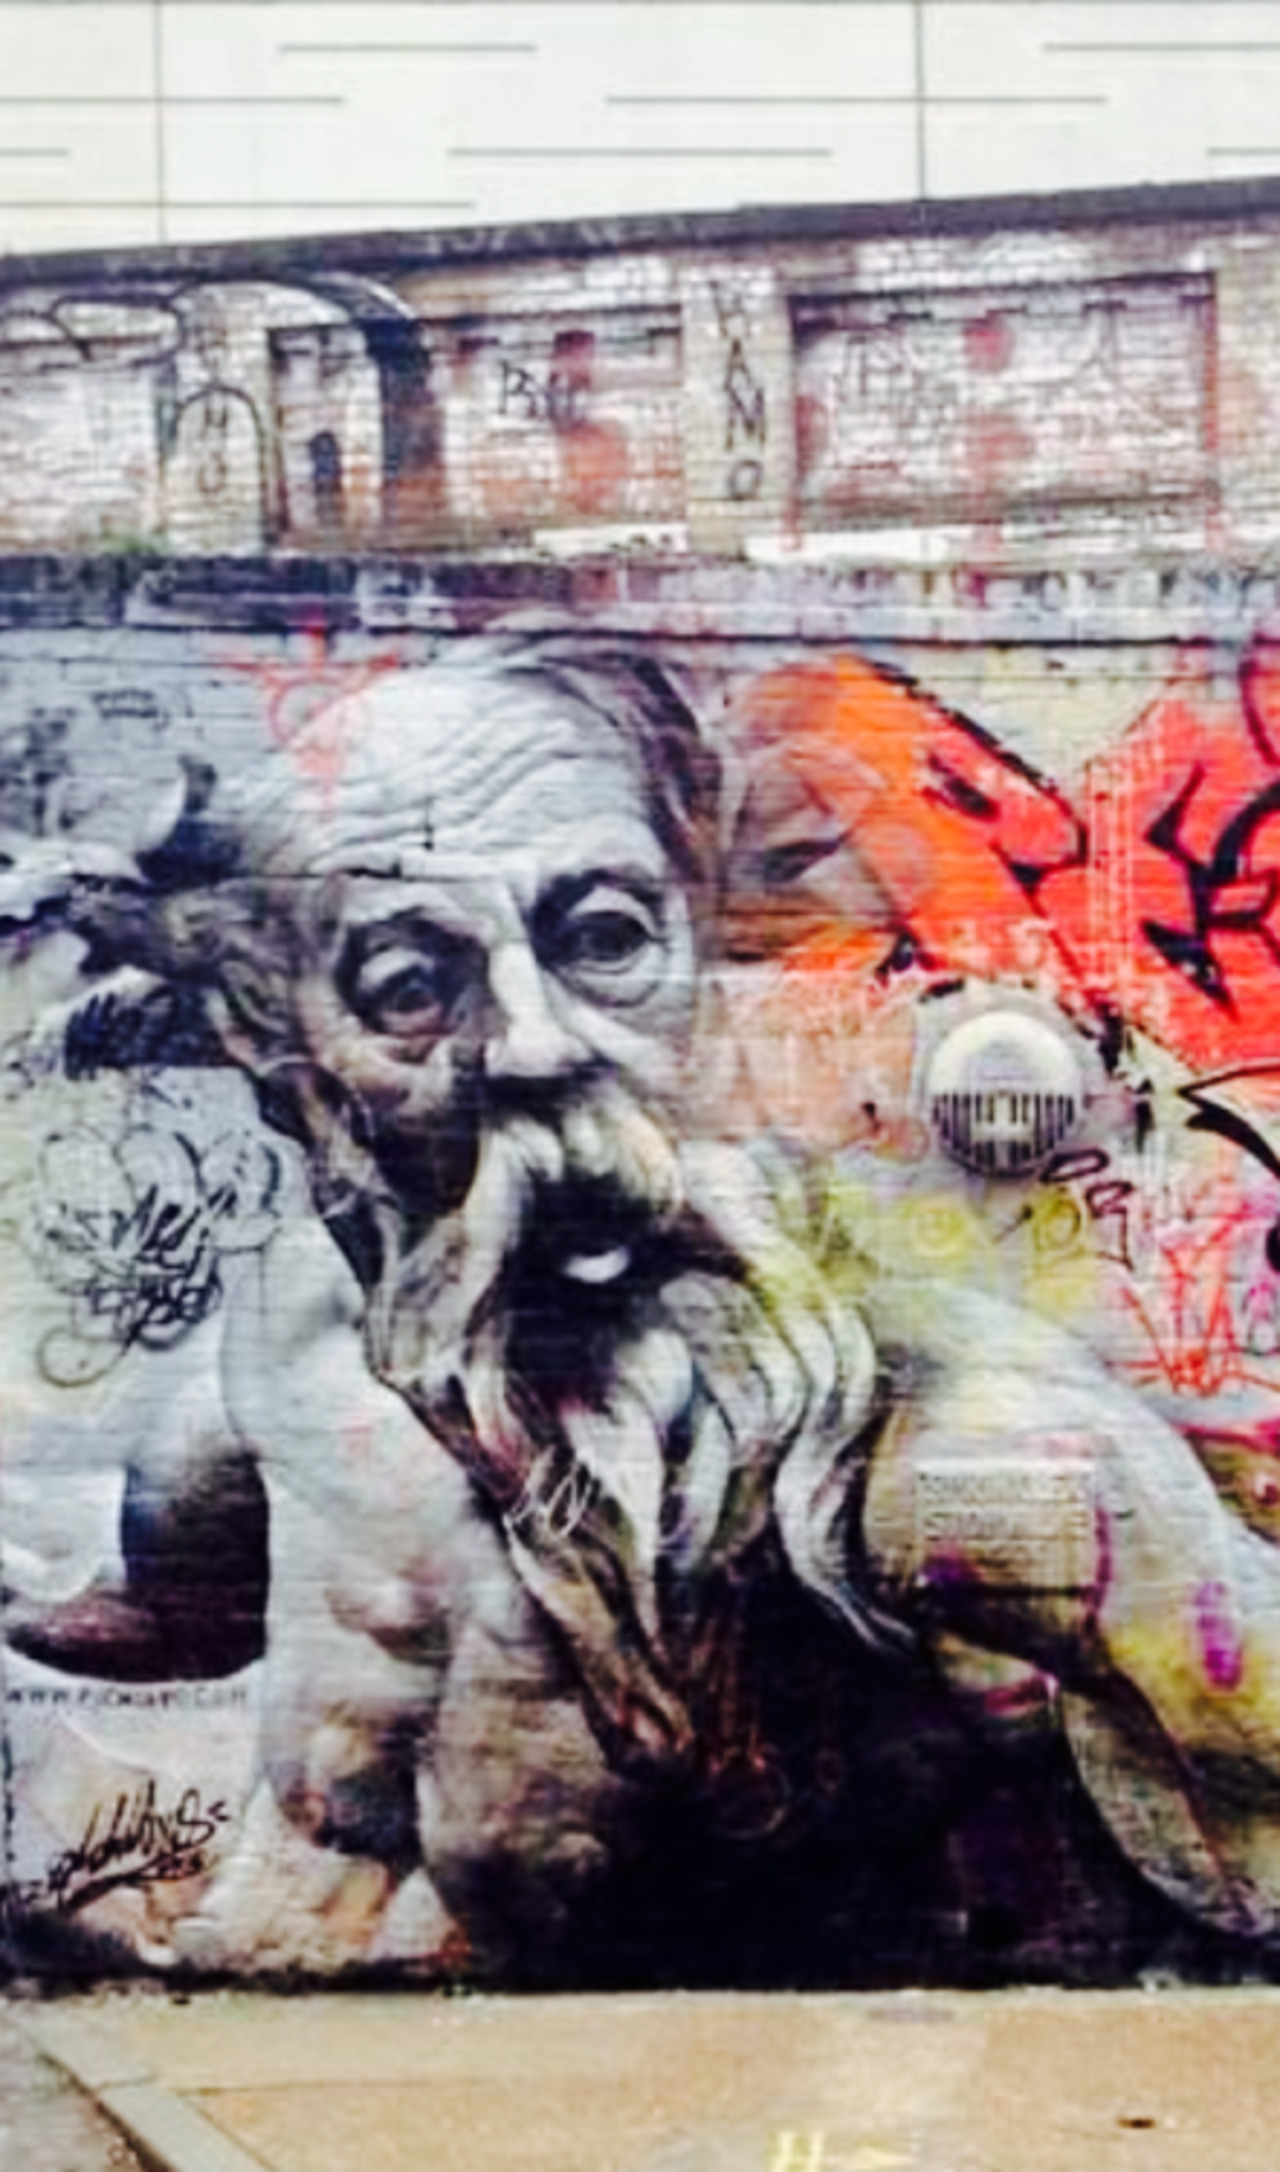 Photo - #Graffiti #Mural #Murales #StreetArt - #ZangArt #Showcase - http://bit.ly/1x5WL8w http://t.co/4FY8cczDsR